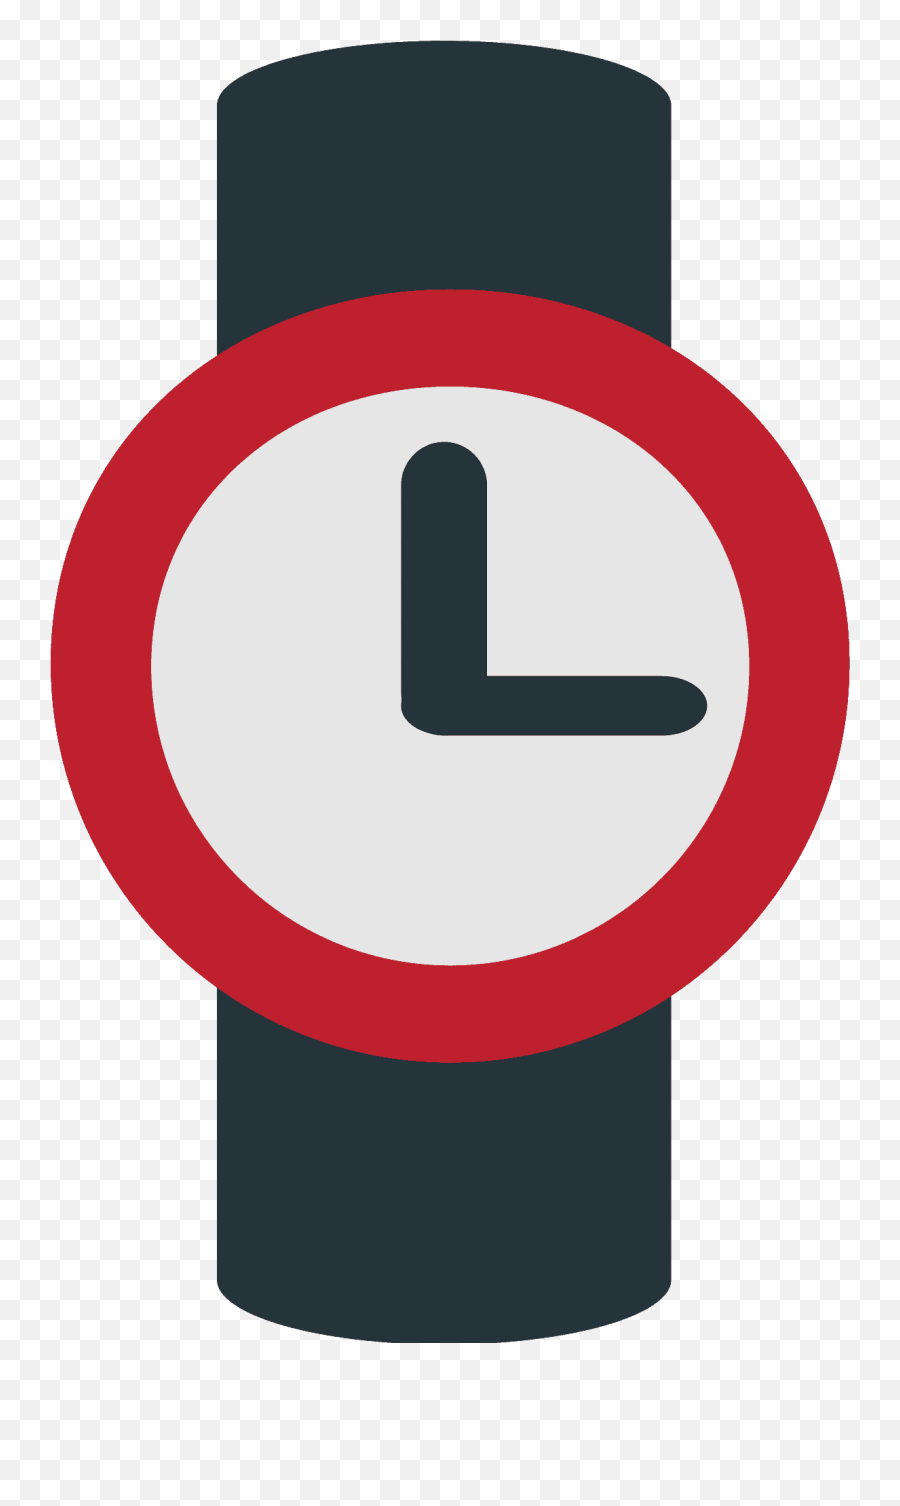 Watch Emoji Clipart - Productivity,Where Is The Watch Emoji